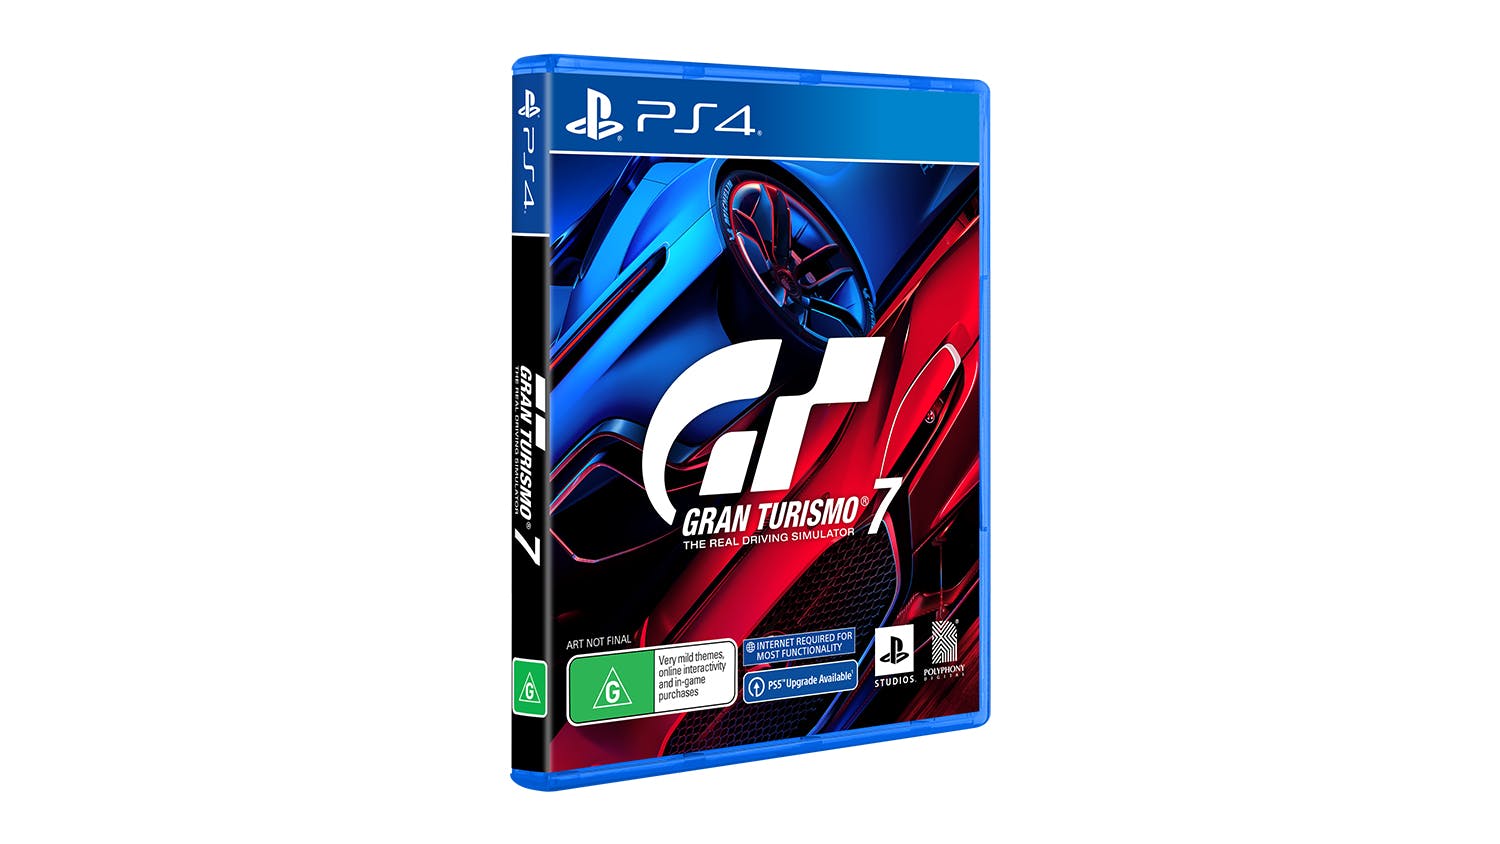 PS4 - Gran Turismo 7 (G)  Harvey Norman New Zealand